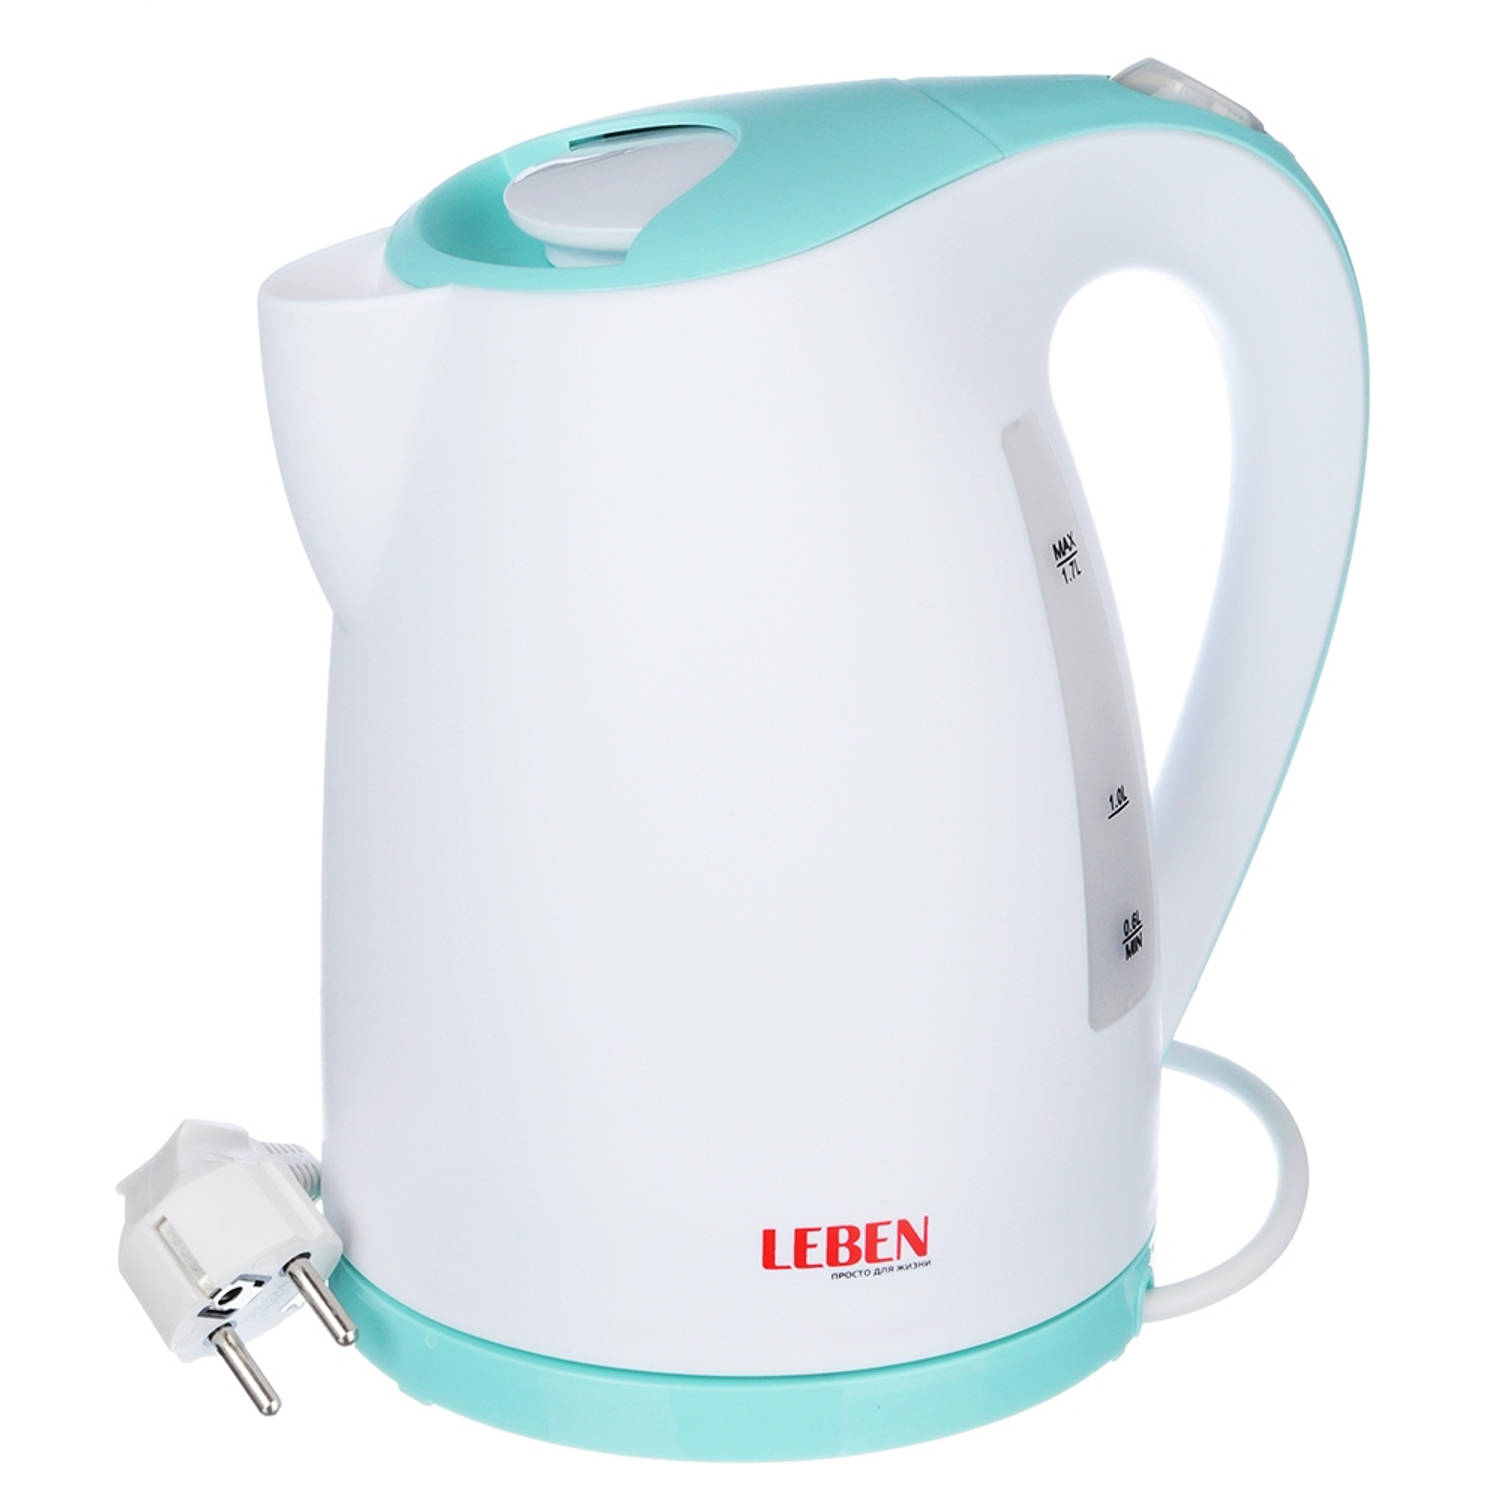 Leben Waterkoker - 1,7 liter - 1850 watt - Blauw